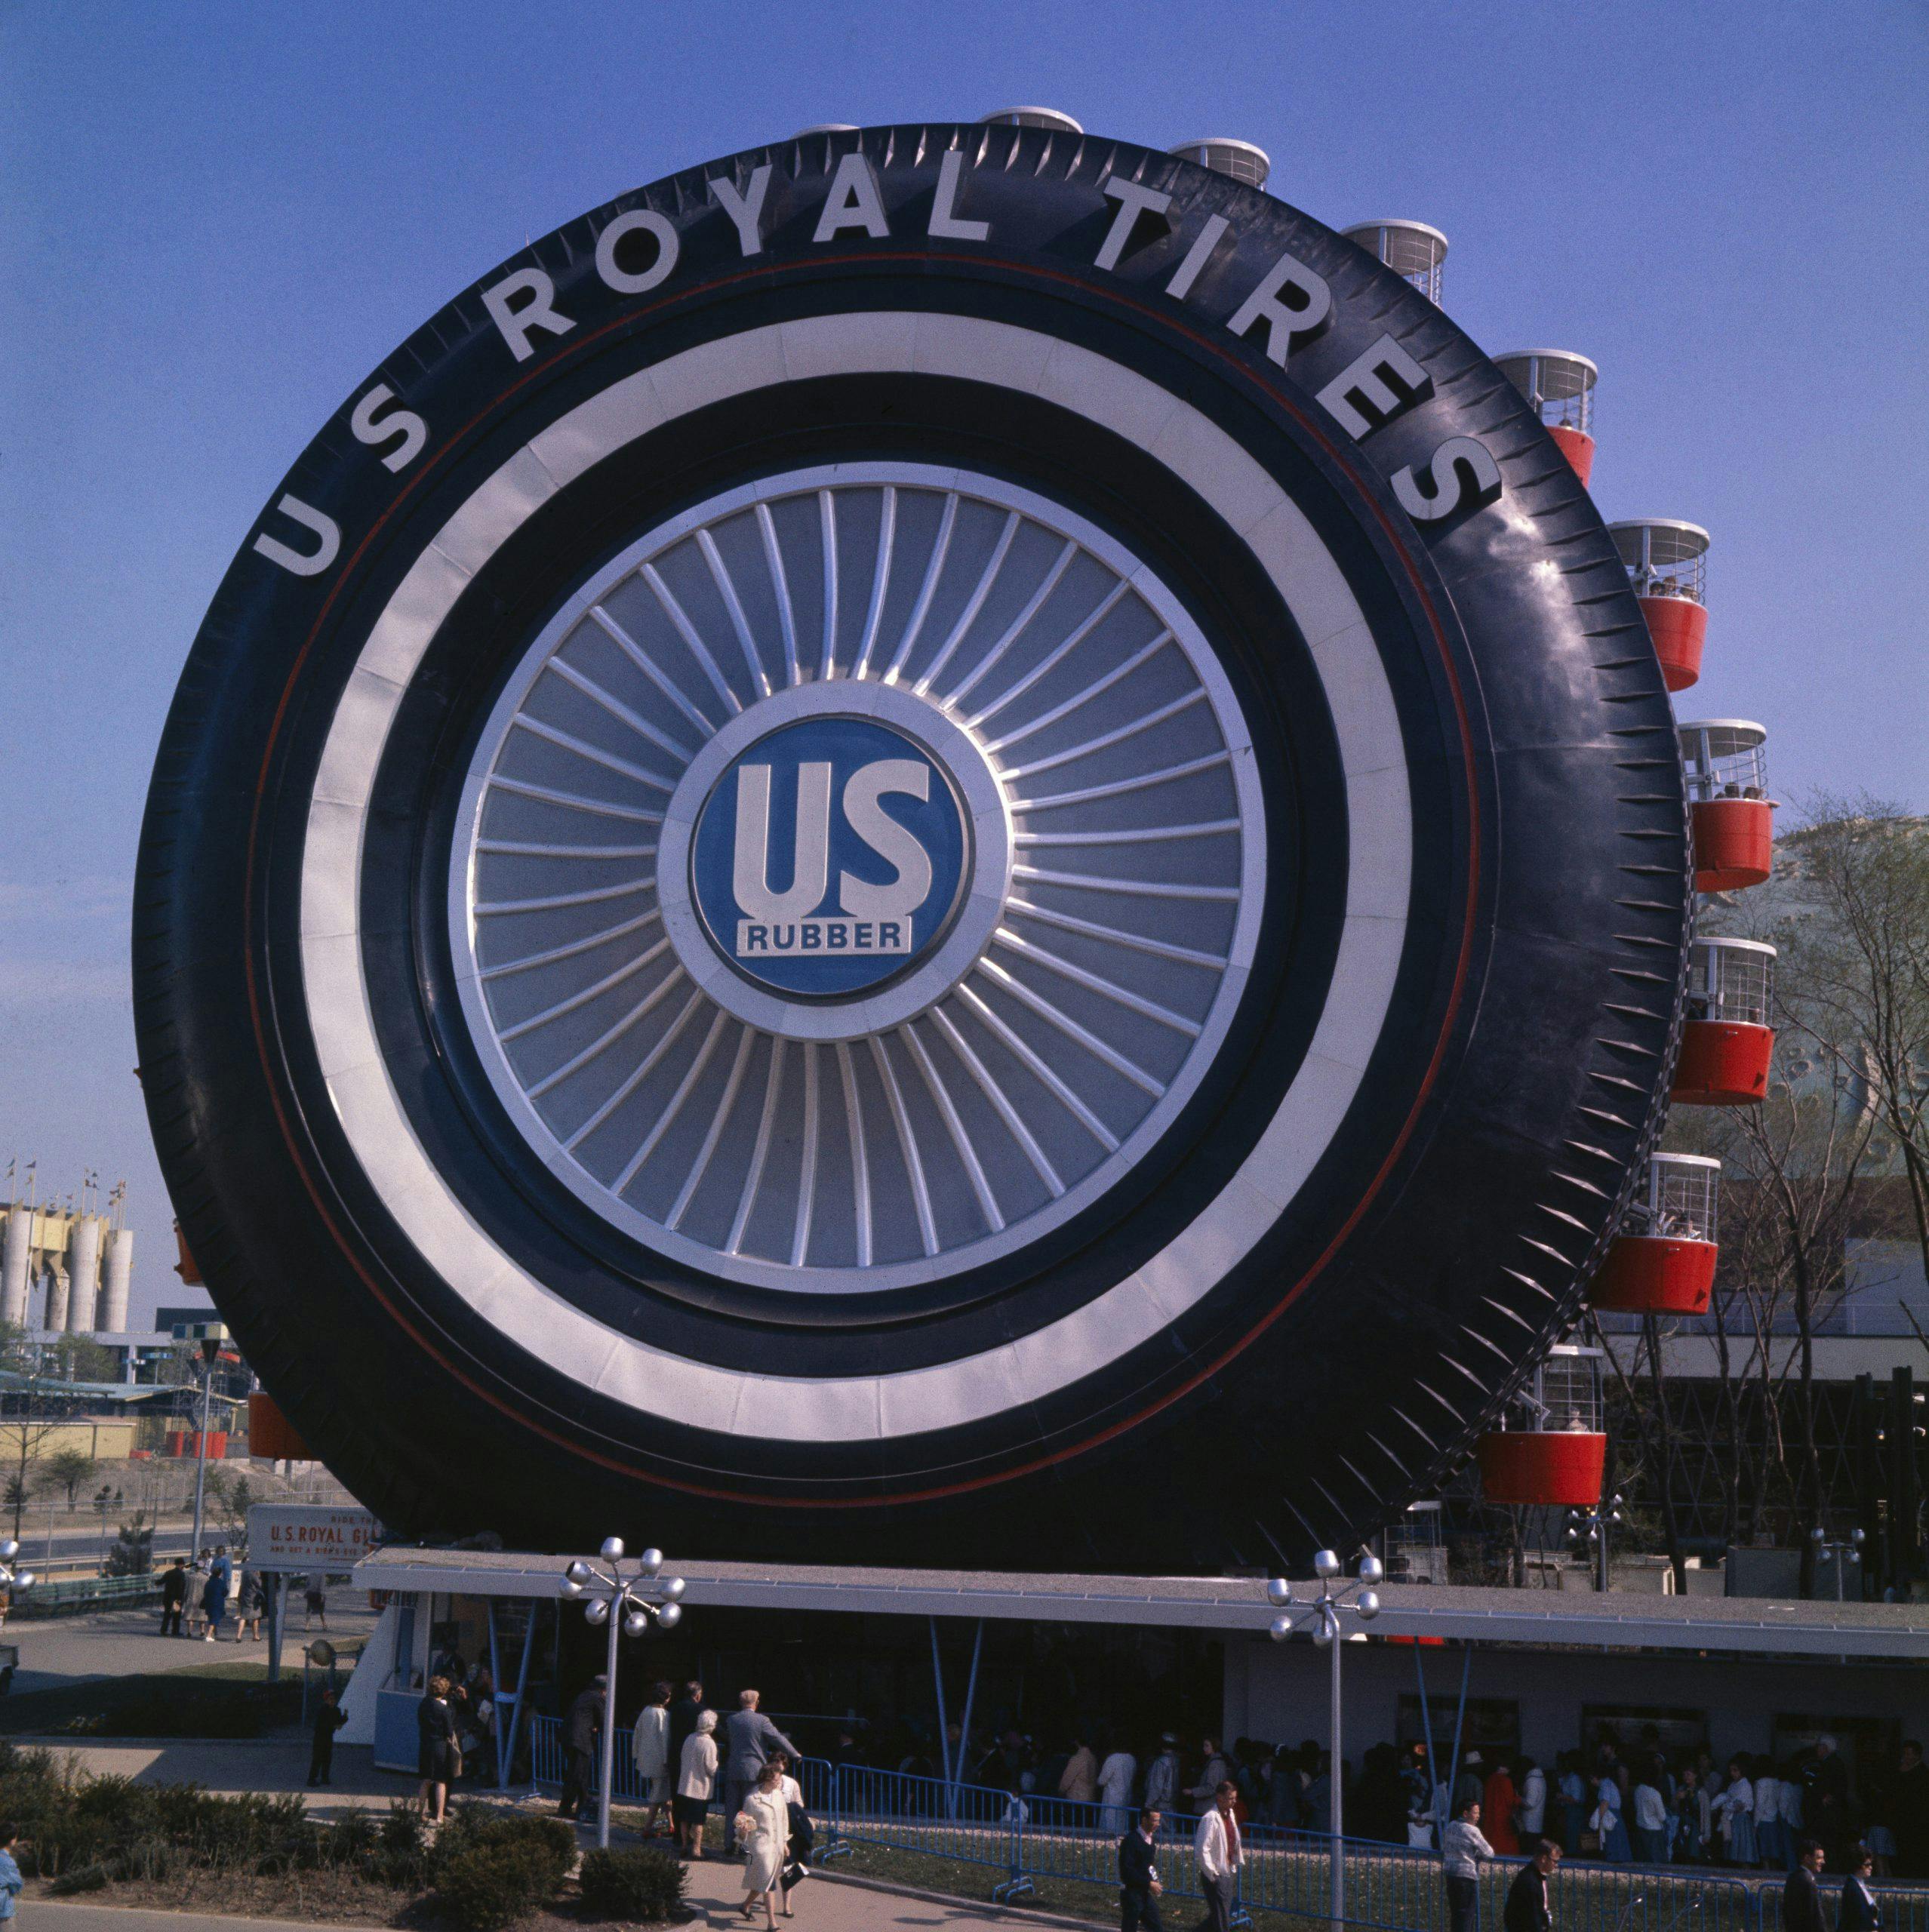 US Rubber Company Ferris Wheel 1964 Worlds Fair